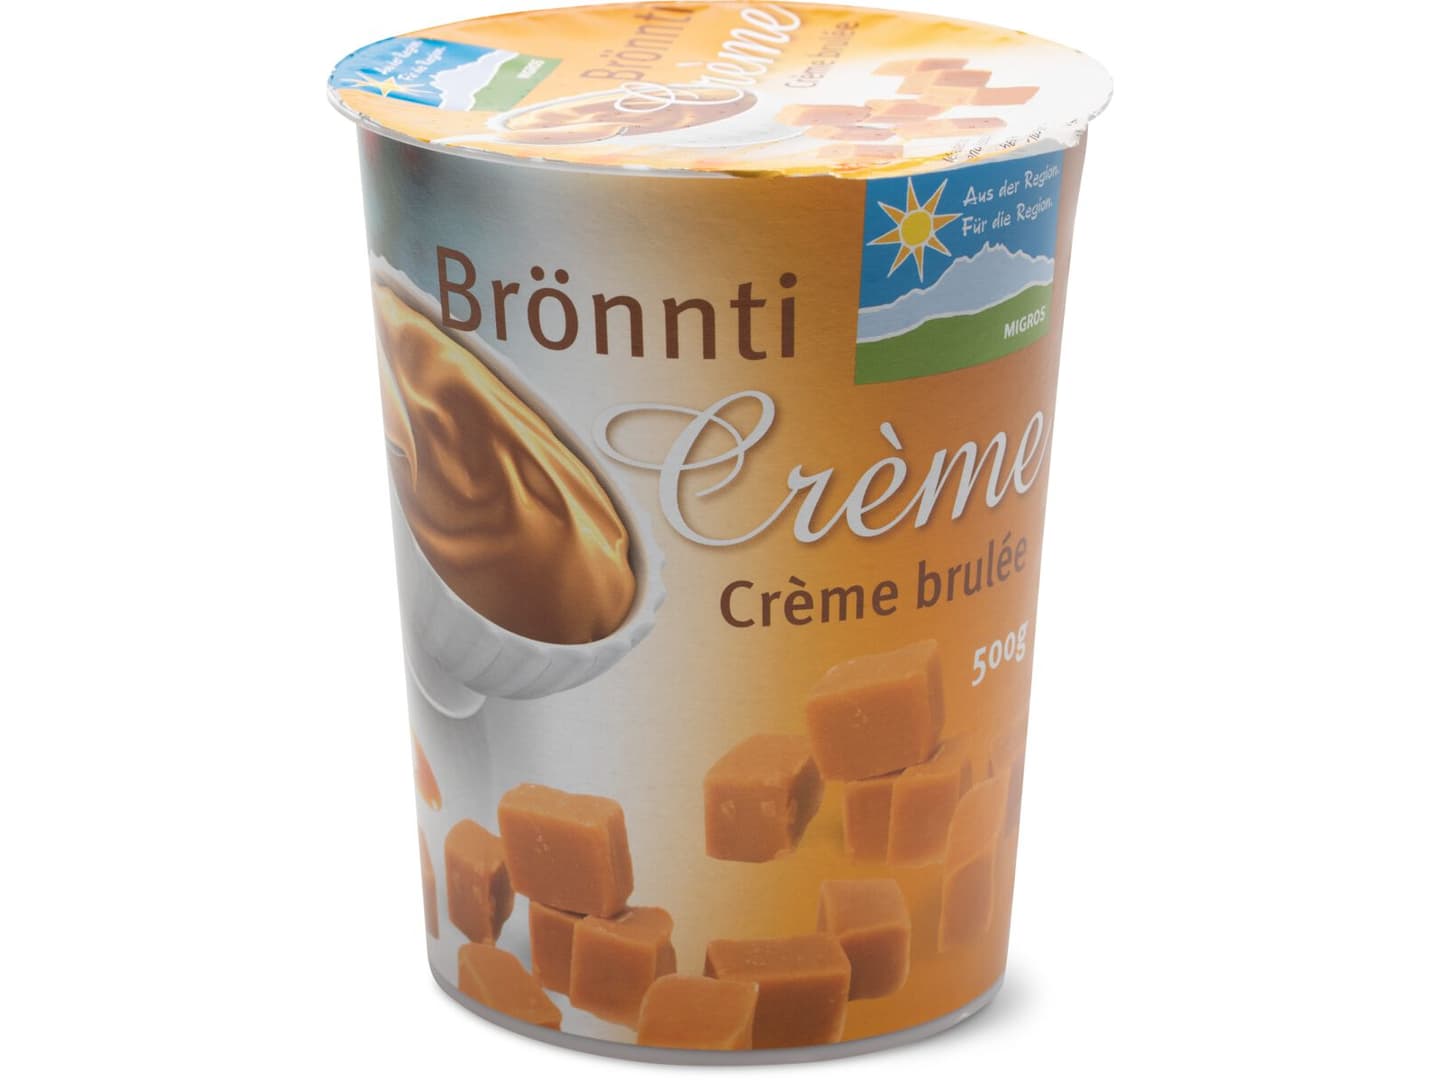 Buy Brönnti Creme • Migros